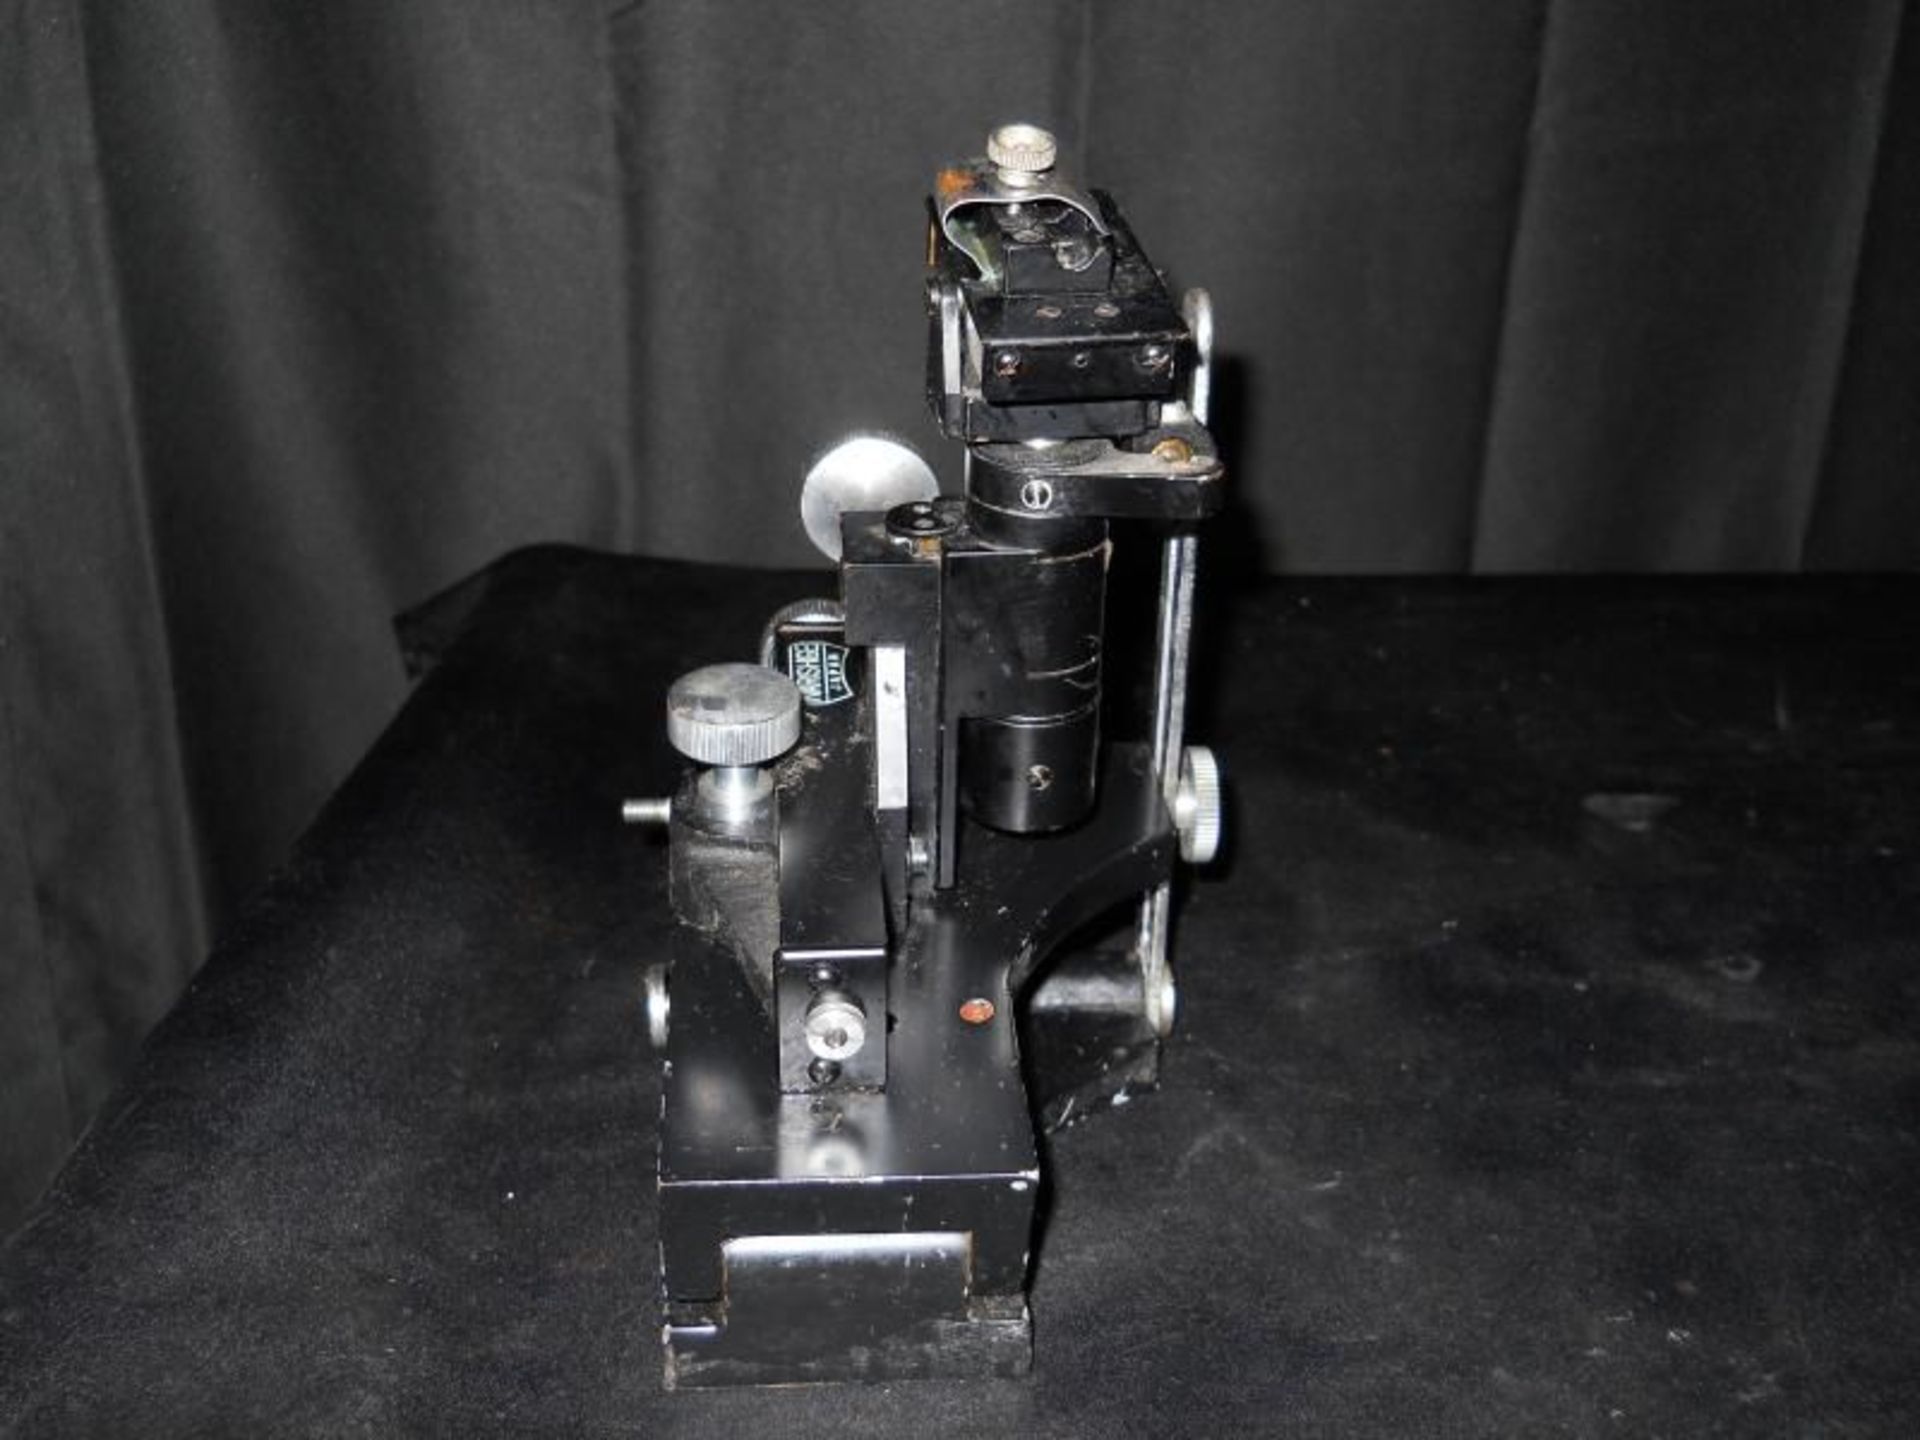 Lot of 6 Narishige Micro Manipulators (For Parts), Qty 1, 321981750676 - Image 8 of 25